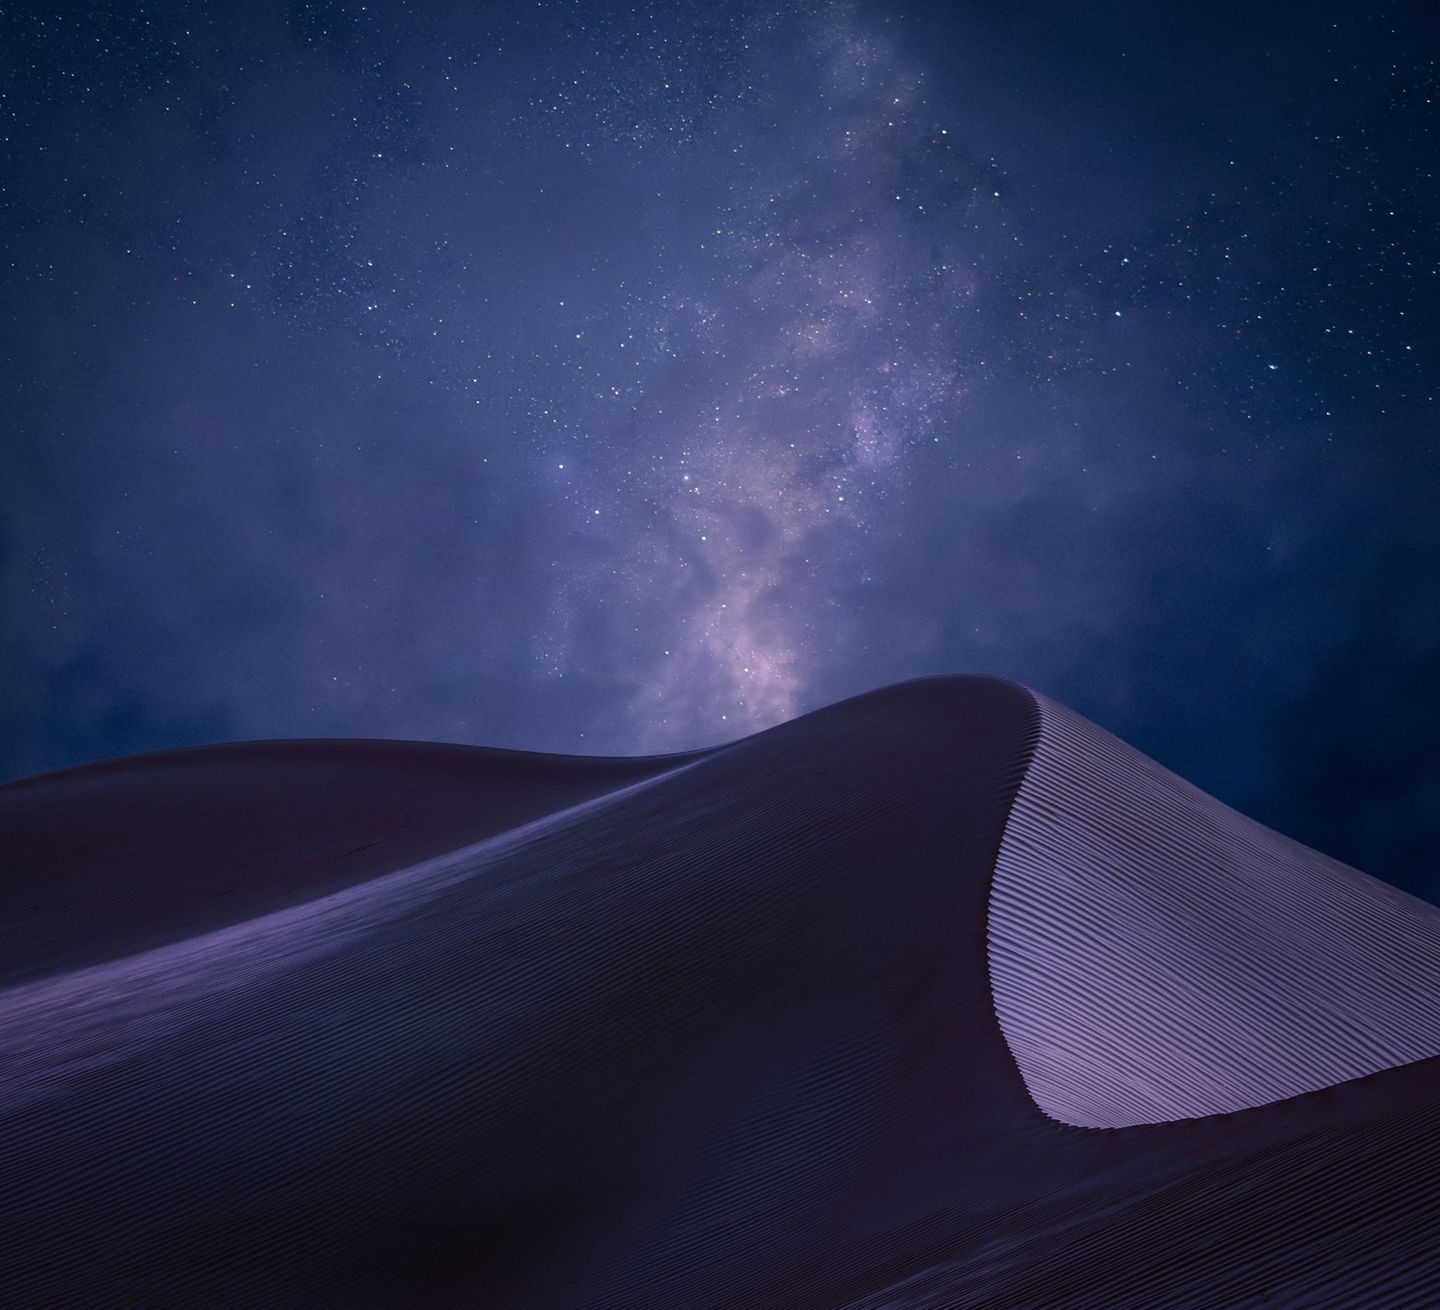 ILPOTY 2019: Wüste mit Sternenhimmel